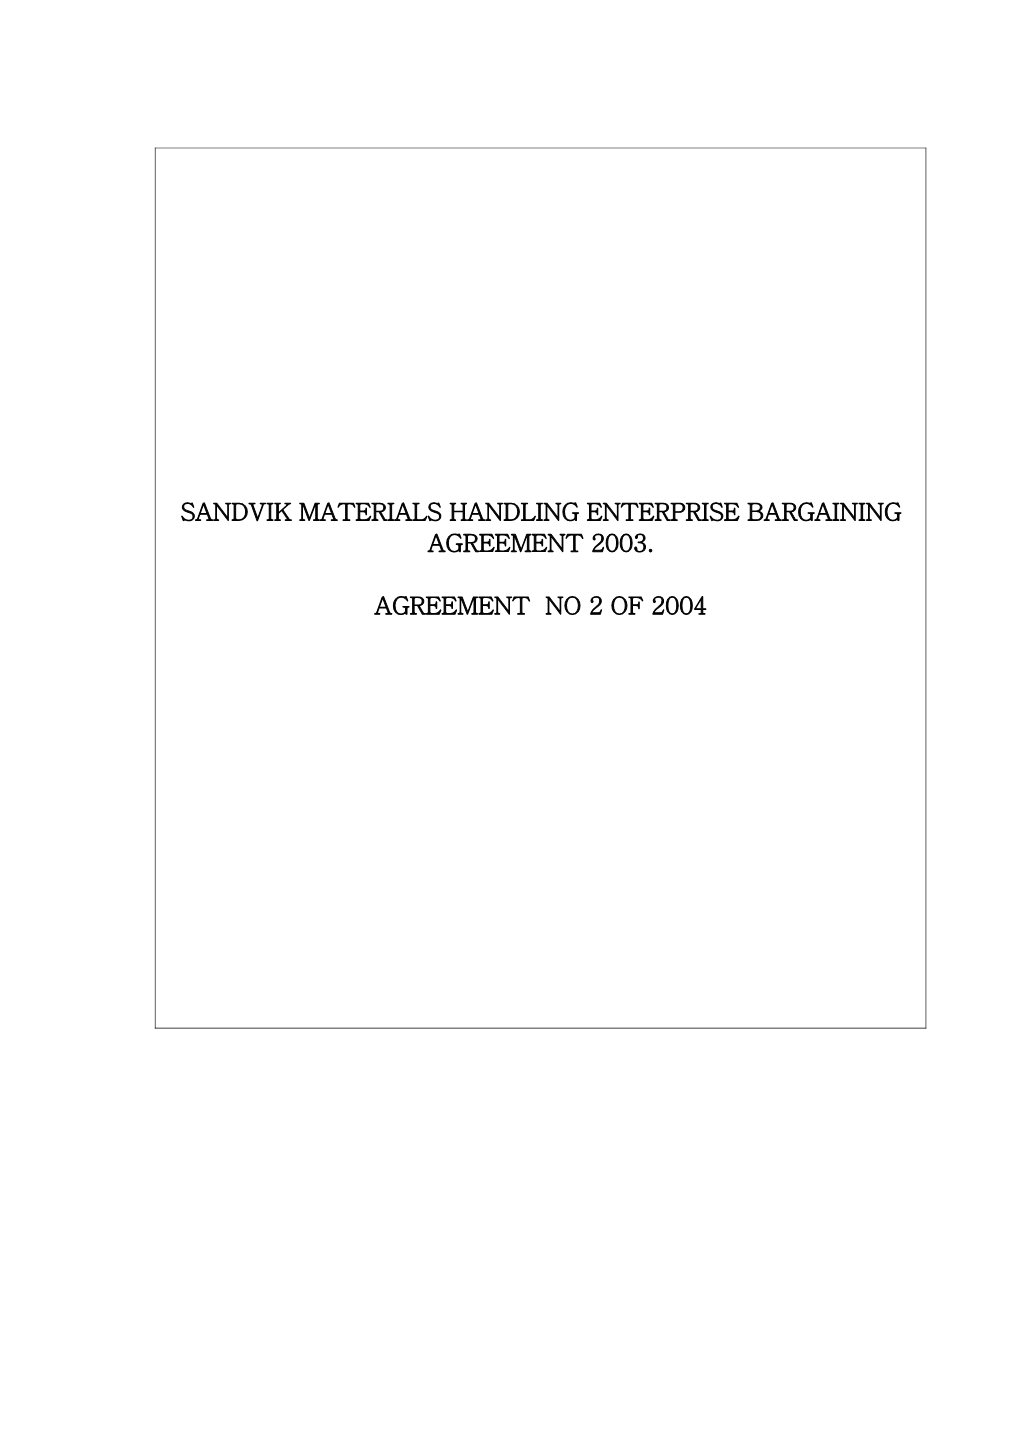 Sandvik Materials Handling Enterprise Bargaining Agreement 2003